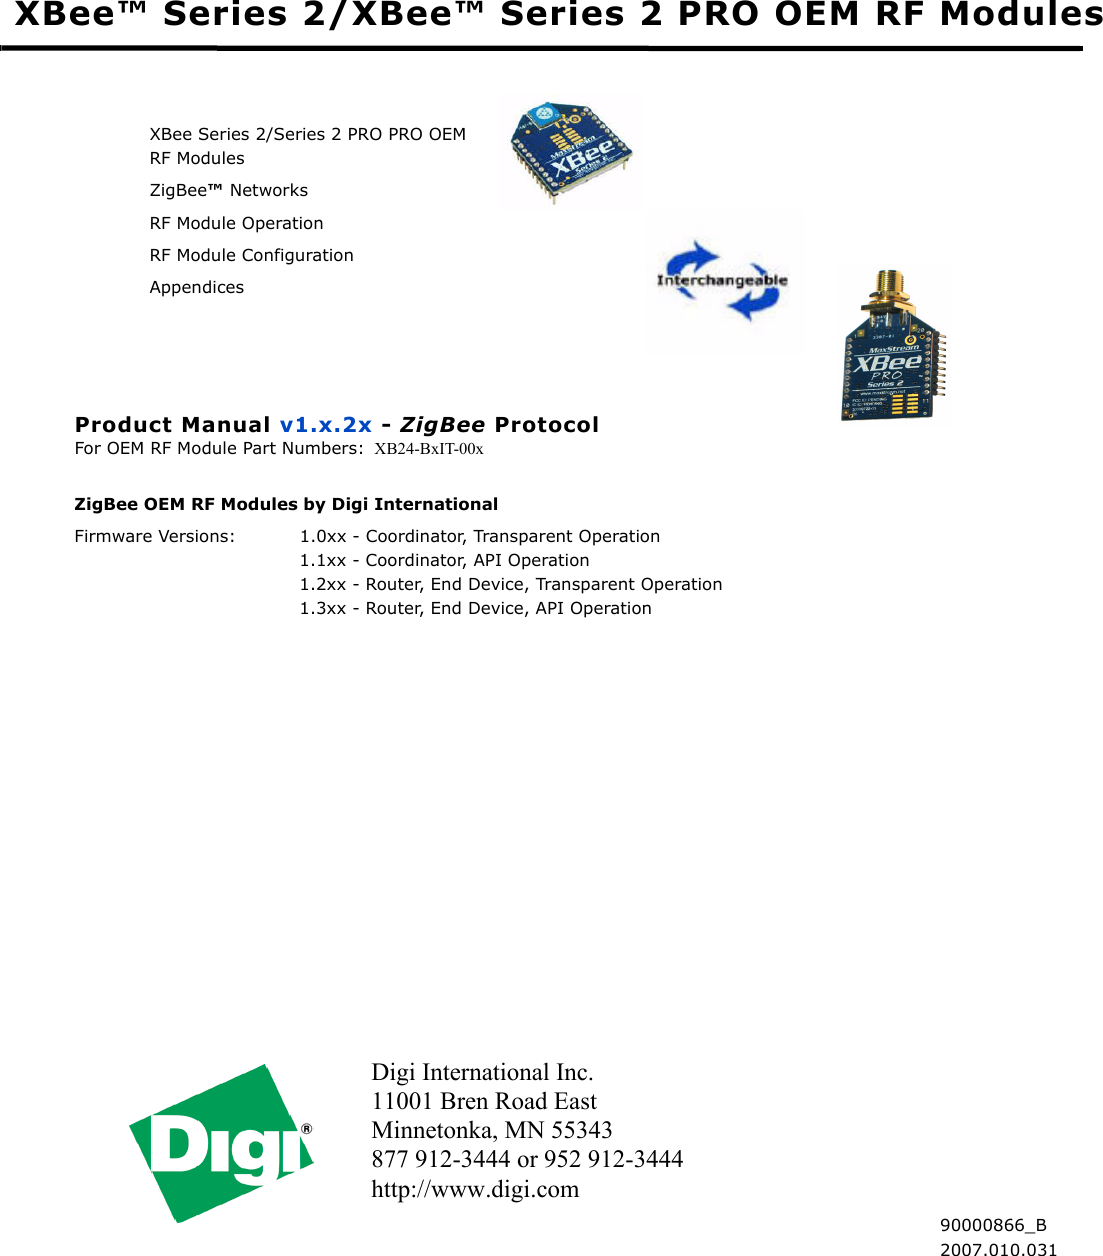 Digi International Inc.11001 Bren Road EastMinnetonka, MN 55343 877 912-3444 or 952 912-3444 http://www.digi.com XBee™ Series 2/XBee™ Series 2 PRO OEM RF ModulesXBee Series 2/Series 2 PRO PRO OEM RF ModulesZigBee™ NetworksRF Module OperationRF Module ConfigurationAppendicesProduct Manual v1.x.2x - ZigBee ProtocolFor OEM RF Module Part Numbers: XB24-BxIT-00x ZigBee OEM RF Modules by Digi InternationalFirmware Versions: 1.0xx - Coordinator, Transparent Operation 1.1xx - Coordinator, API Operation 1.2xx - Router, End Device, Transparent Operation 1.3xx - Router, End Device, API Operation  90000866_B2007.010.031